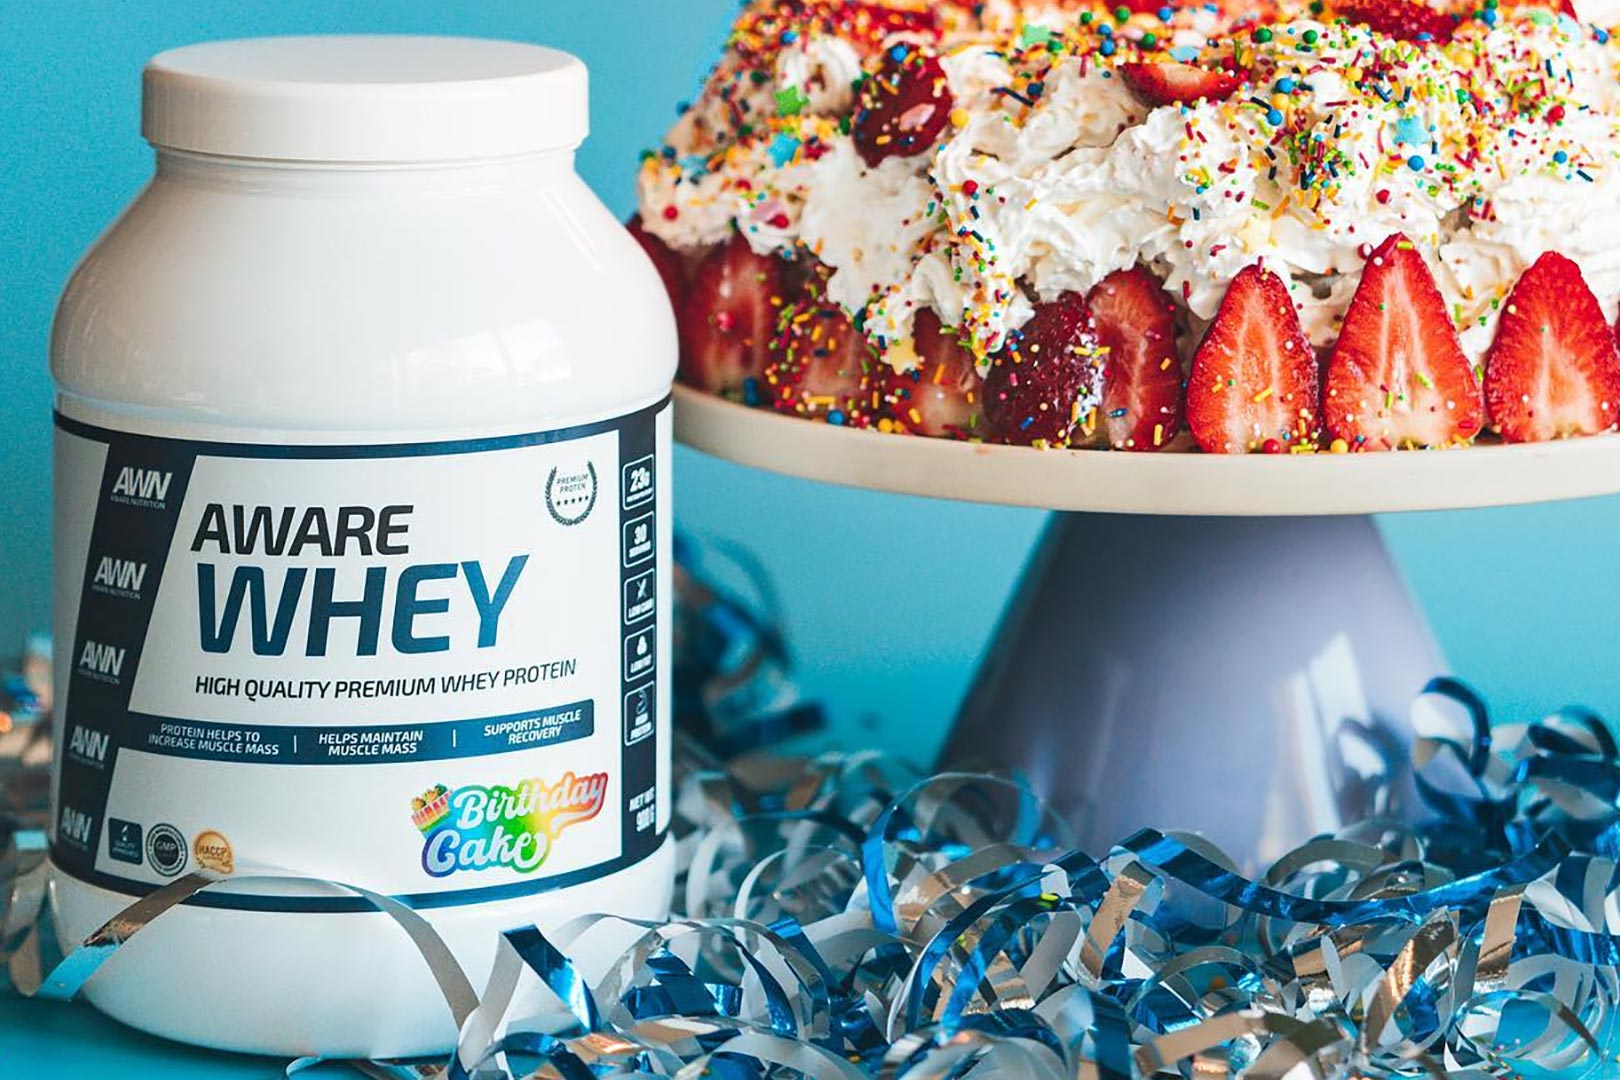 Aware Nutrition celebrates with a Birthday Cake Aware 100% Whey